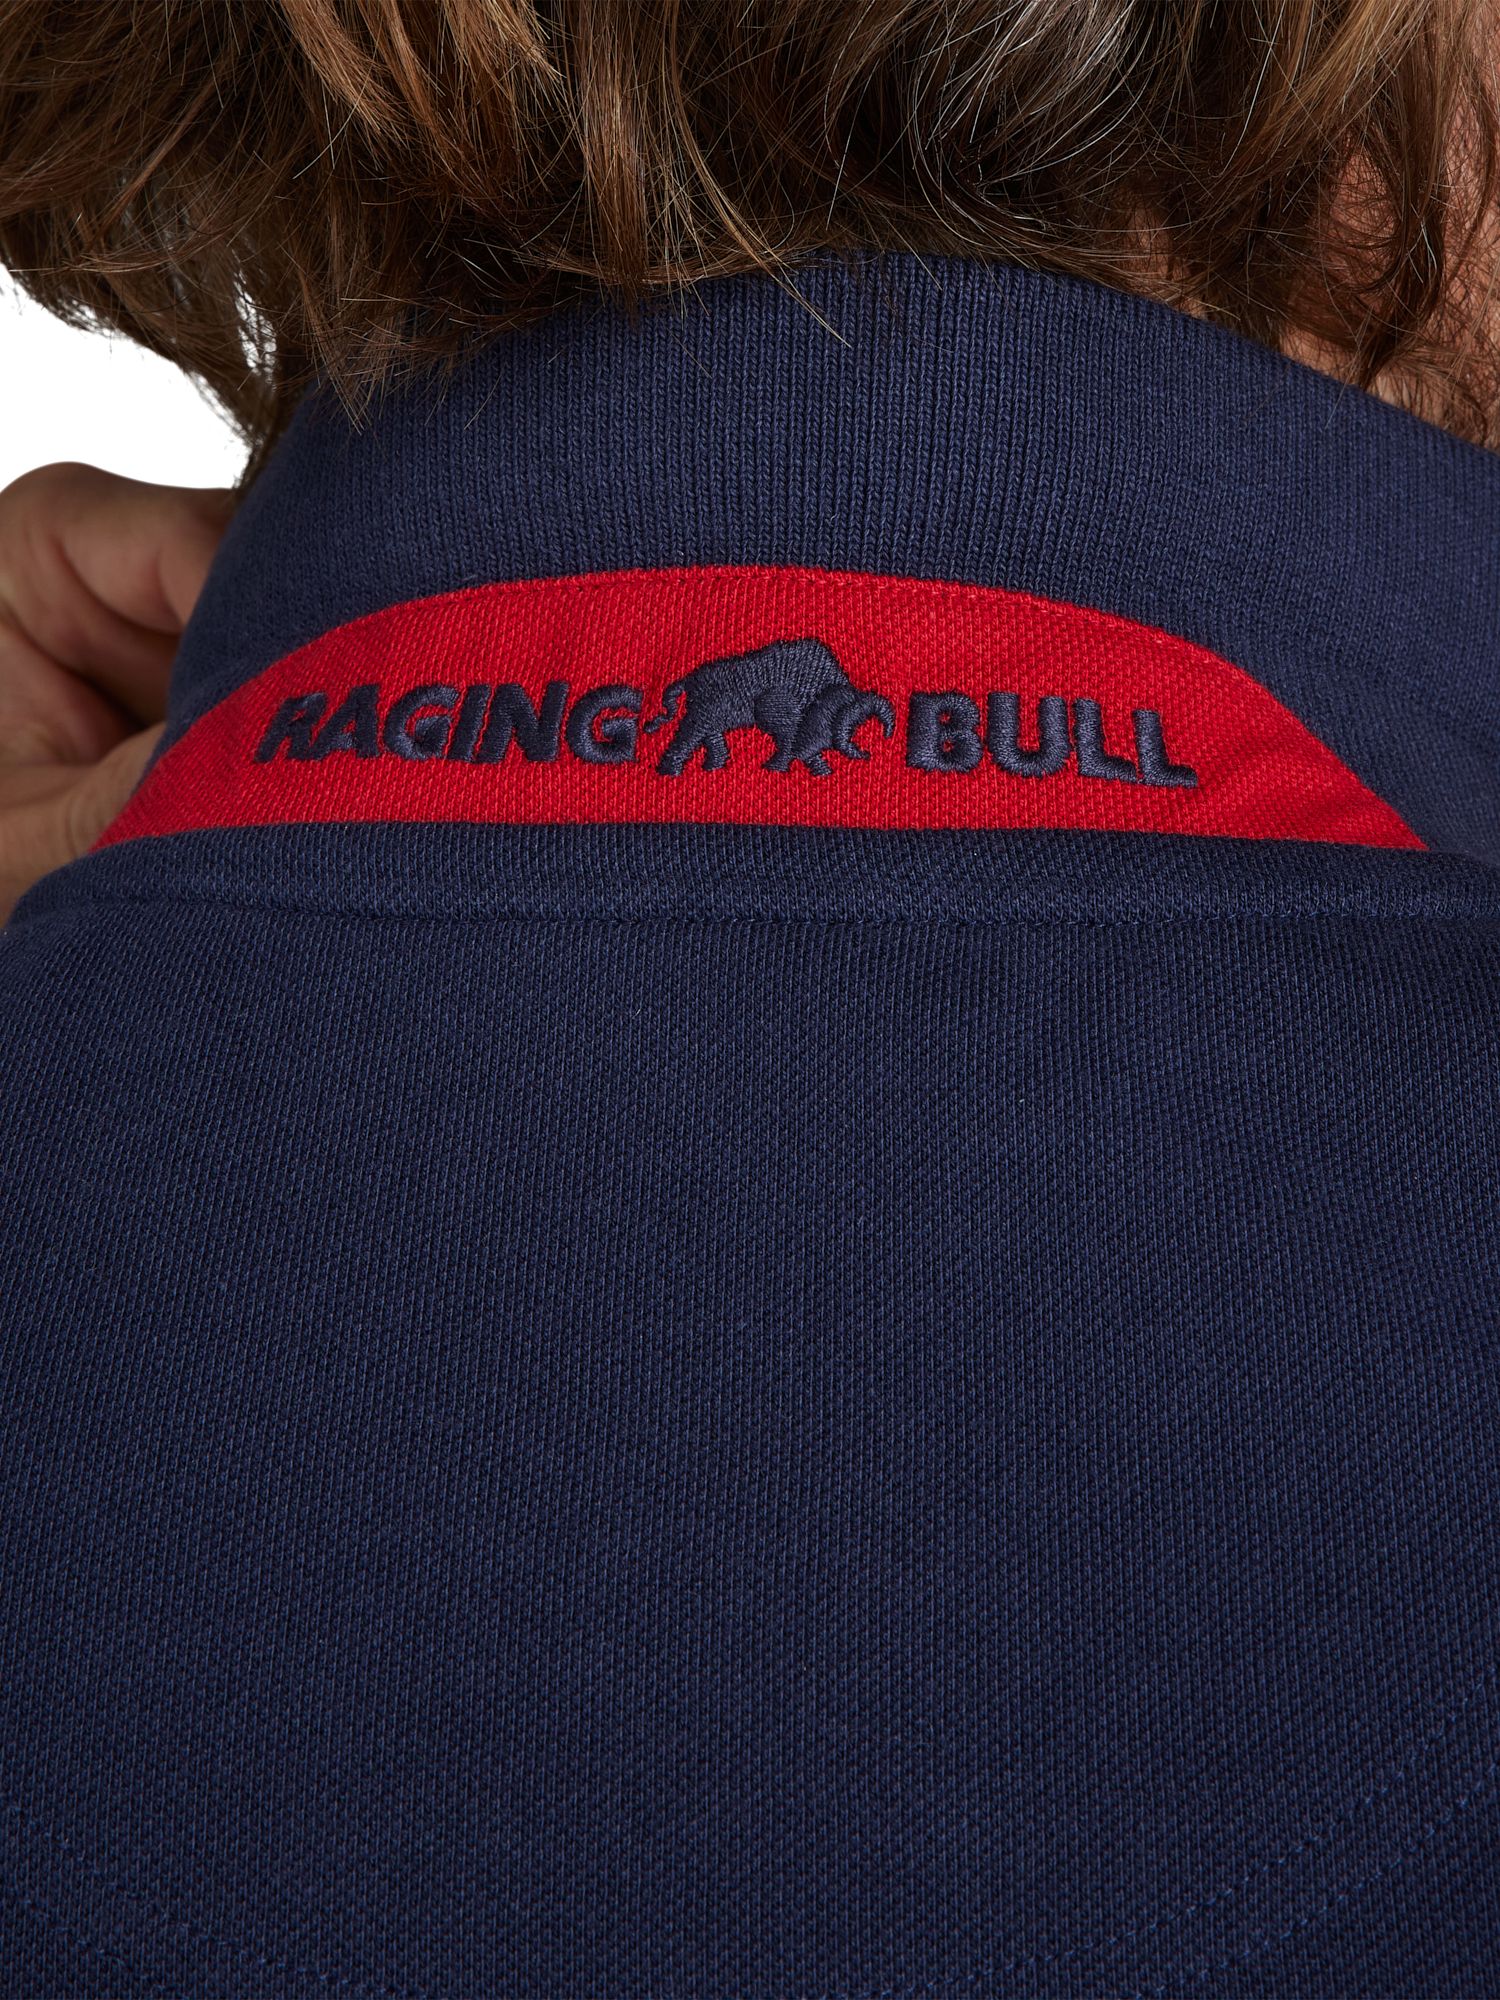 Buy Raging Bull Stripe Pique Polo Shirt, Navy Online at johnlewis.com